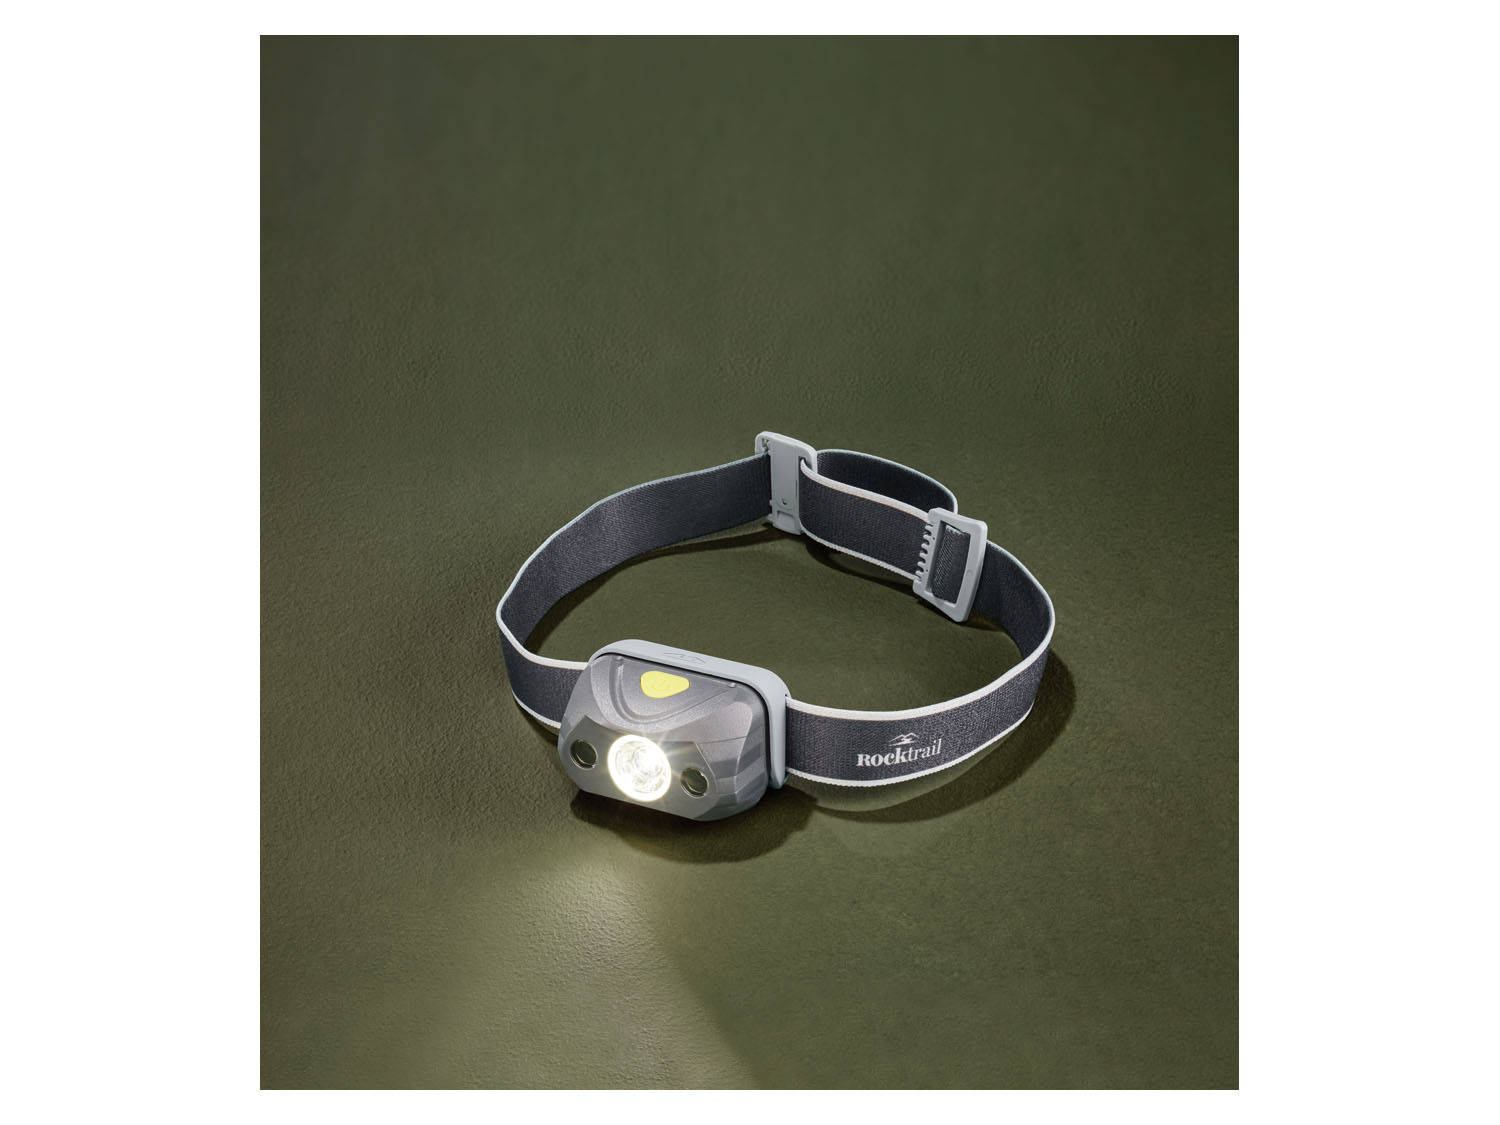 Rocktrail Stirnlampe mit Sensorfunktion | LIDL